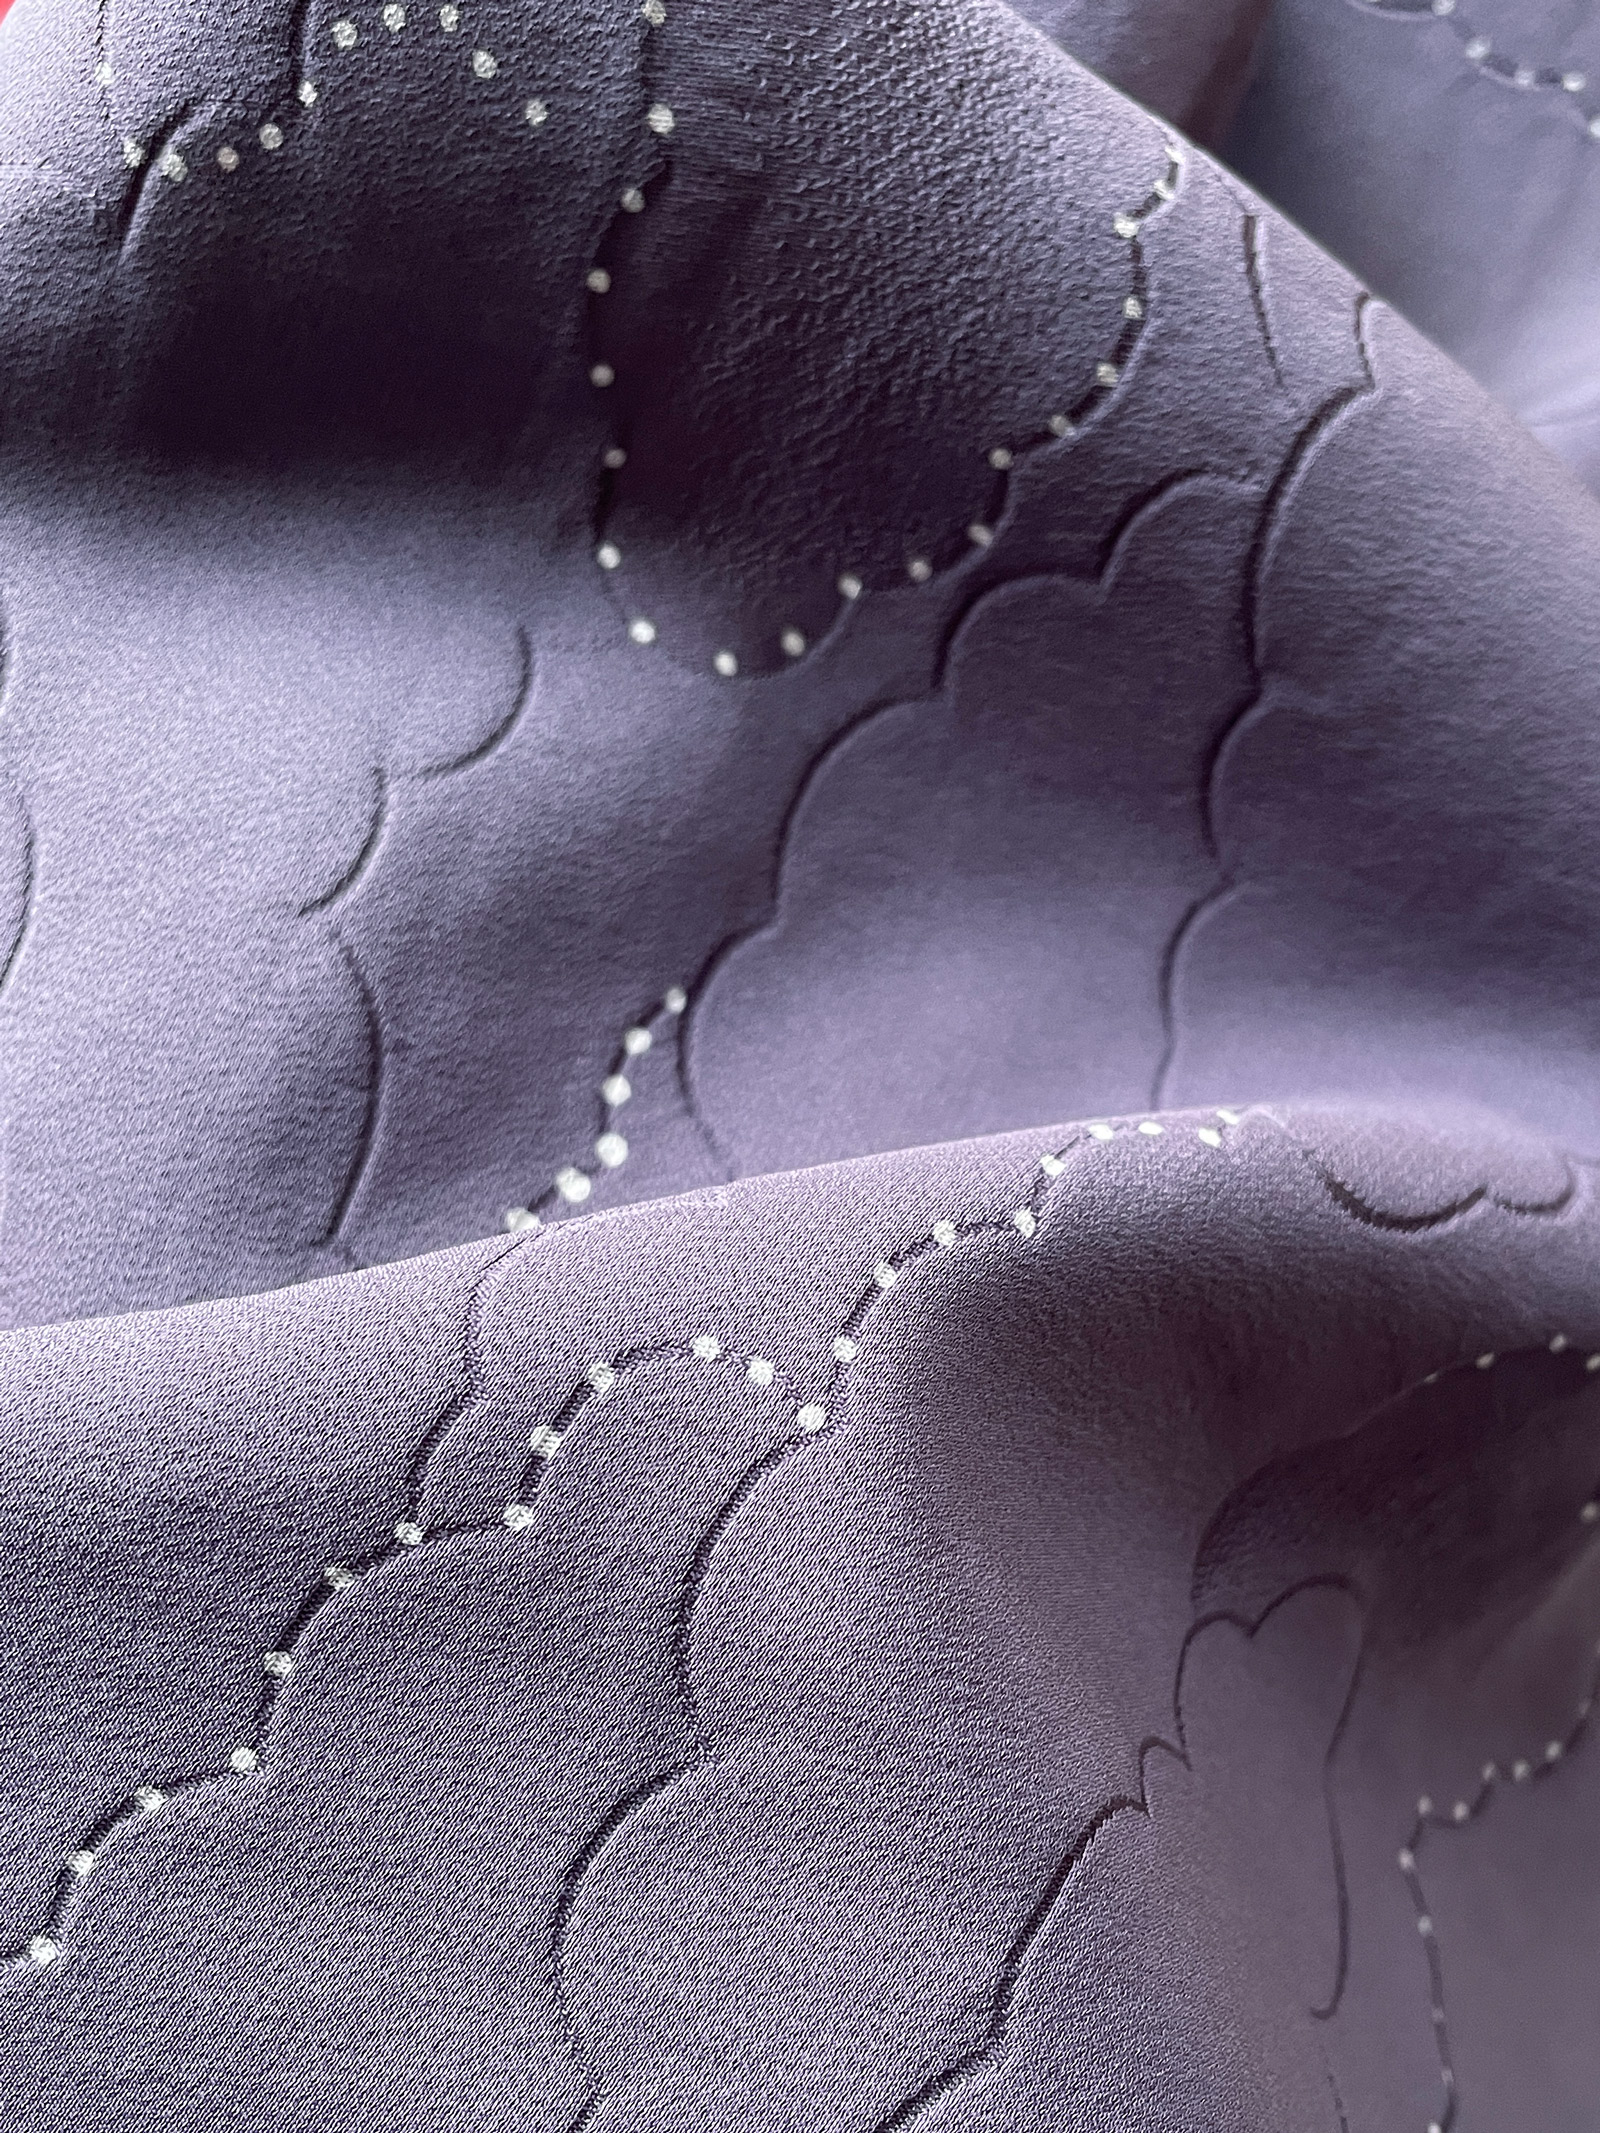 Chisato – Stylish Kimono jacket in lavender-gray color